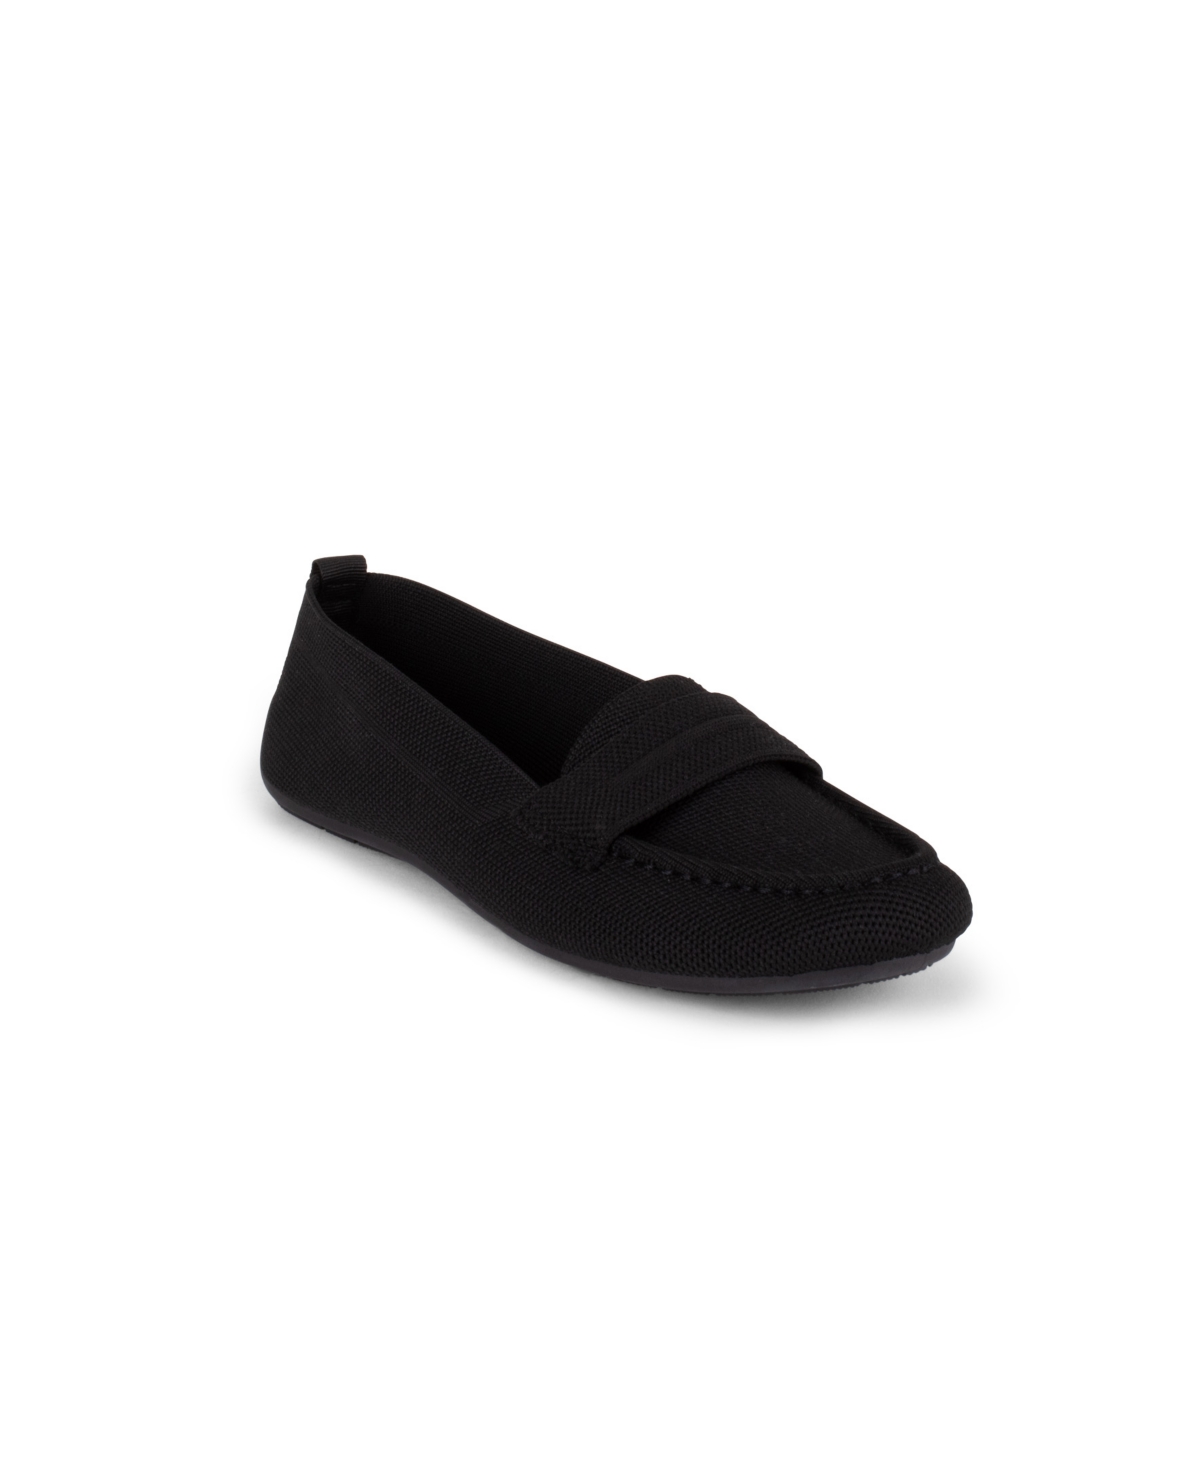 Gloria Vanderbilt Women's Lorna Slip On Moccasin Flats Women's Shoes